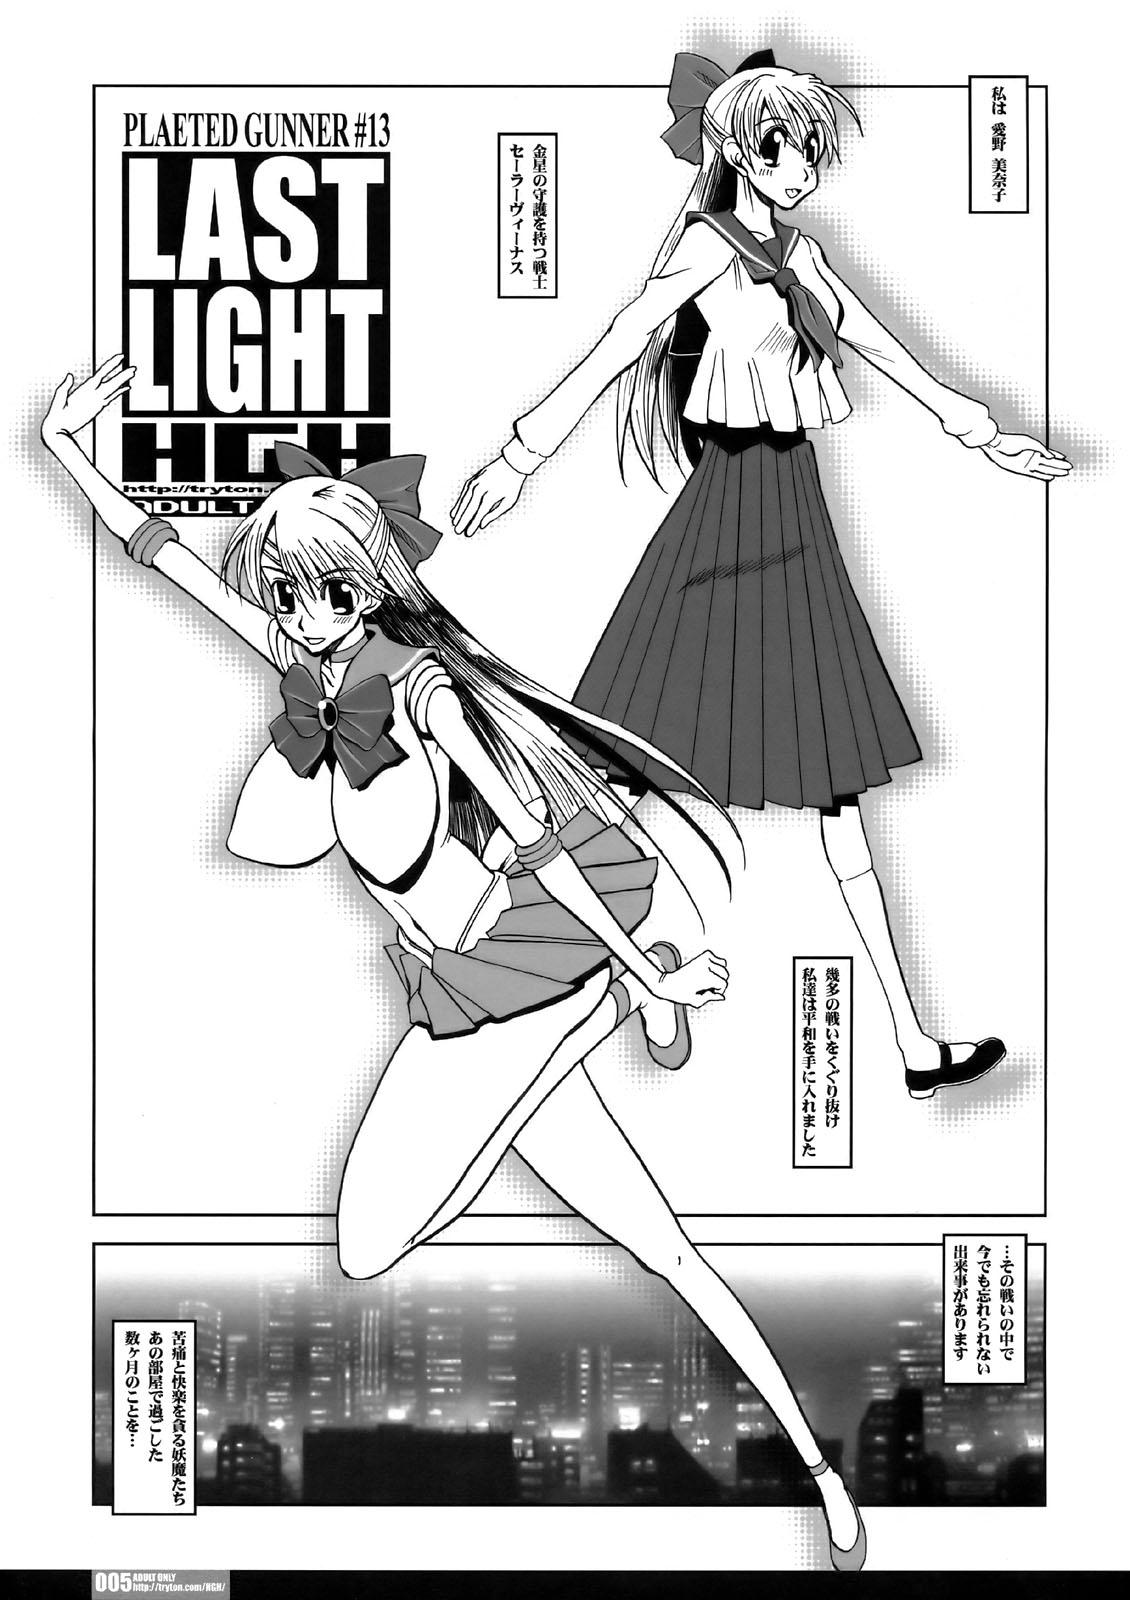 Woman Fucking HGH - Last Light - Sailor moon Girlfriend - Page 5